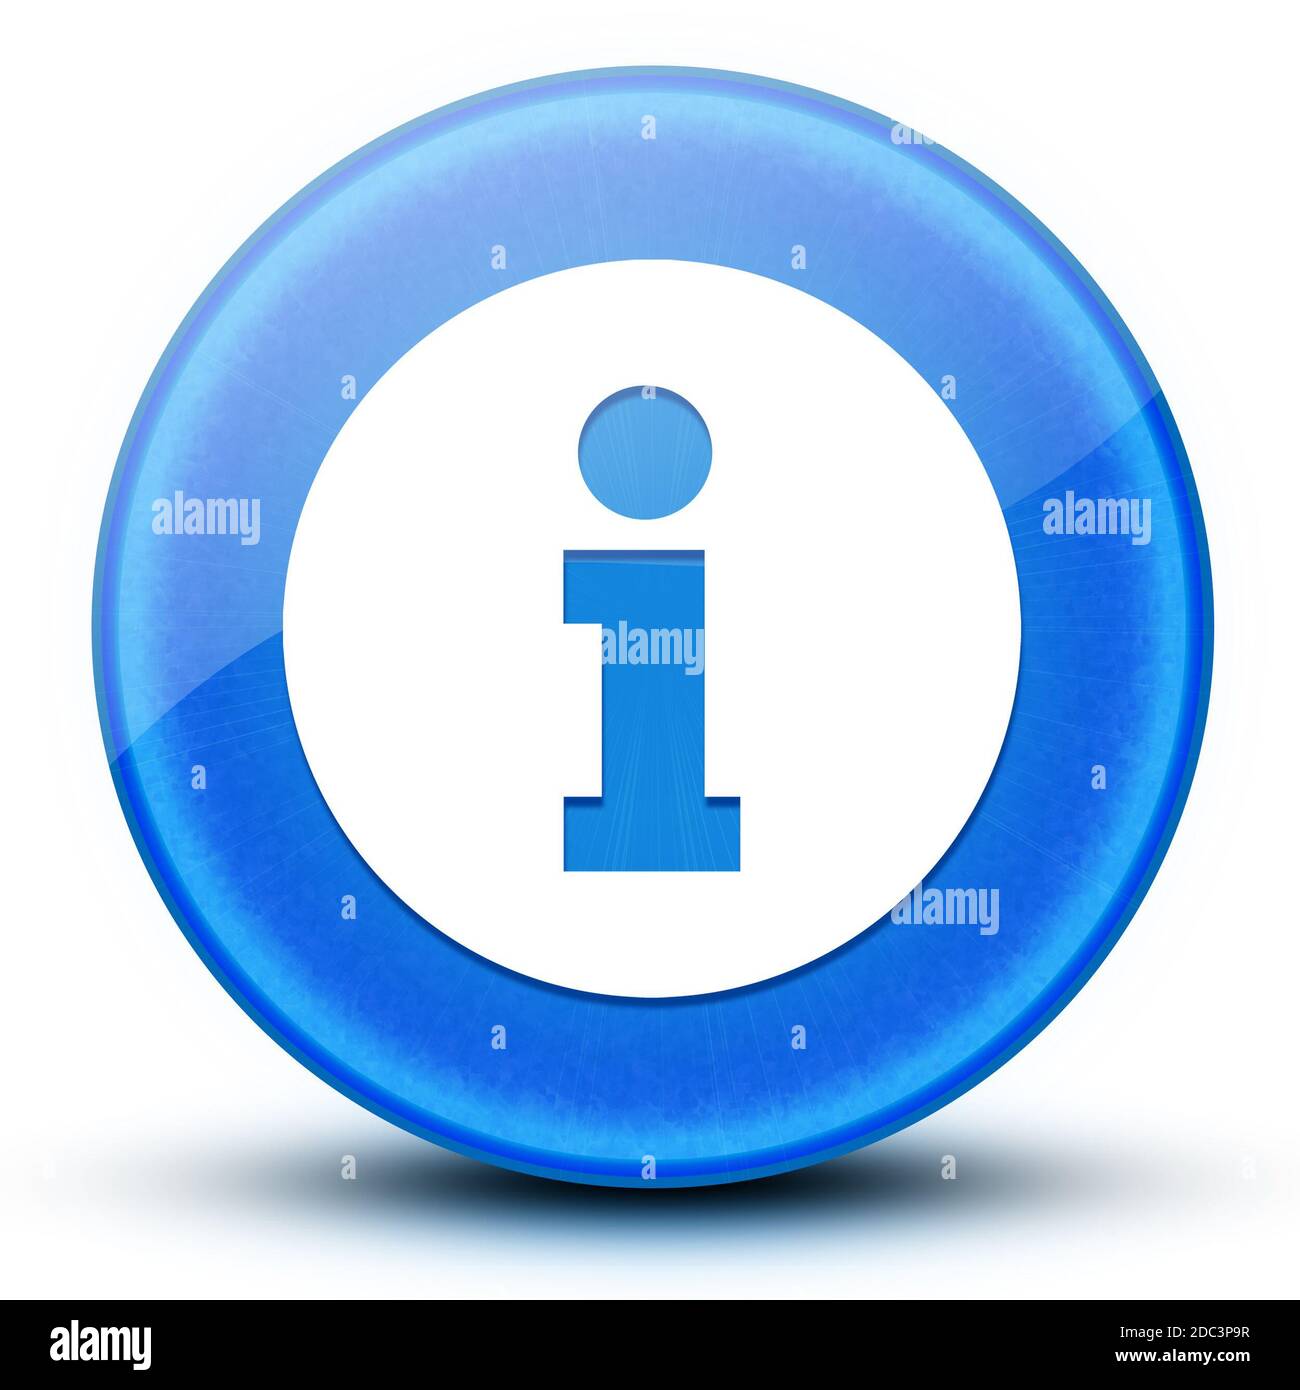 Info eyeball glossy blue round button abstract illustration Stock Photo